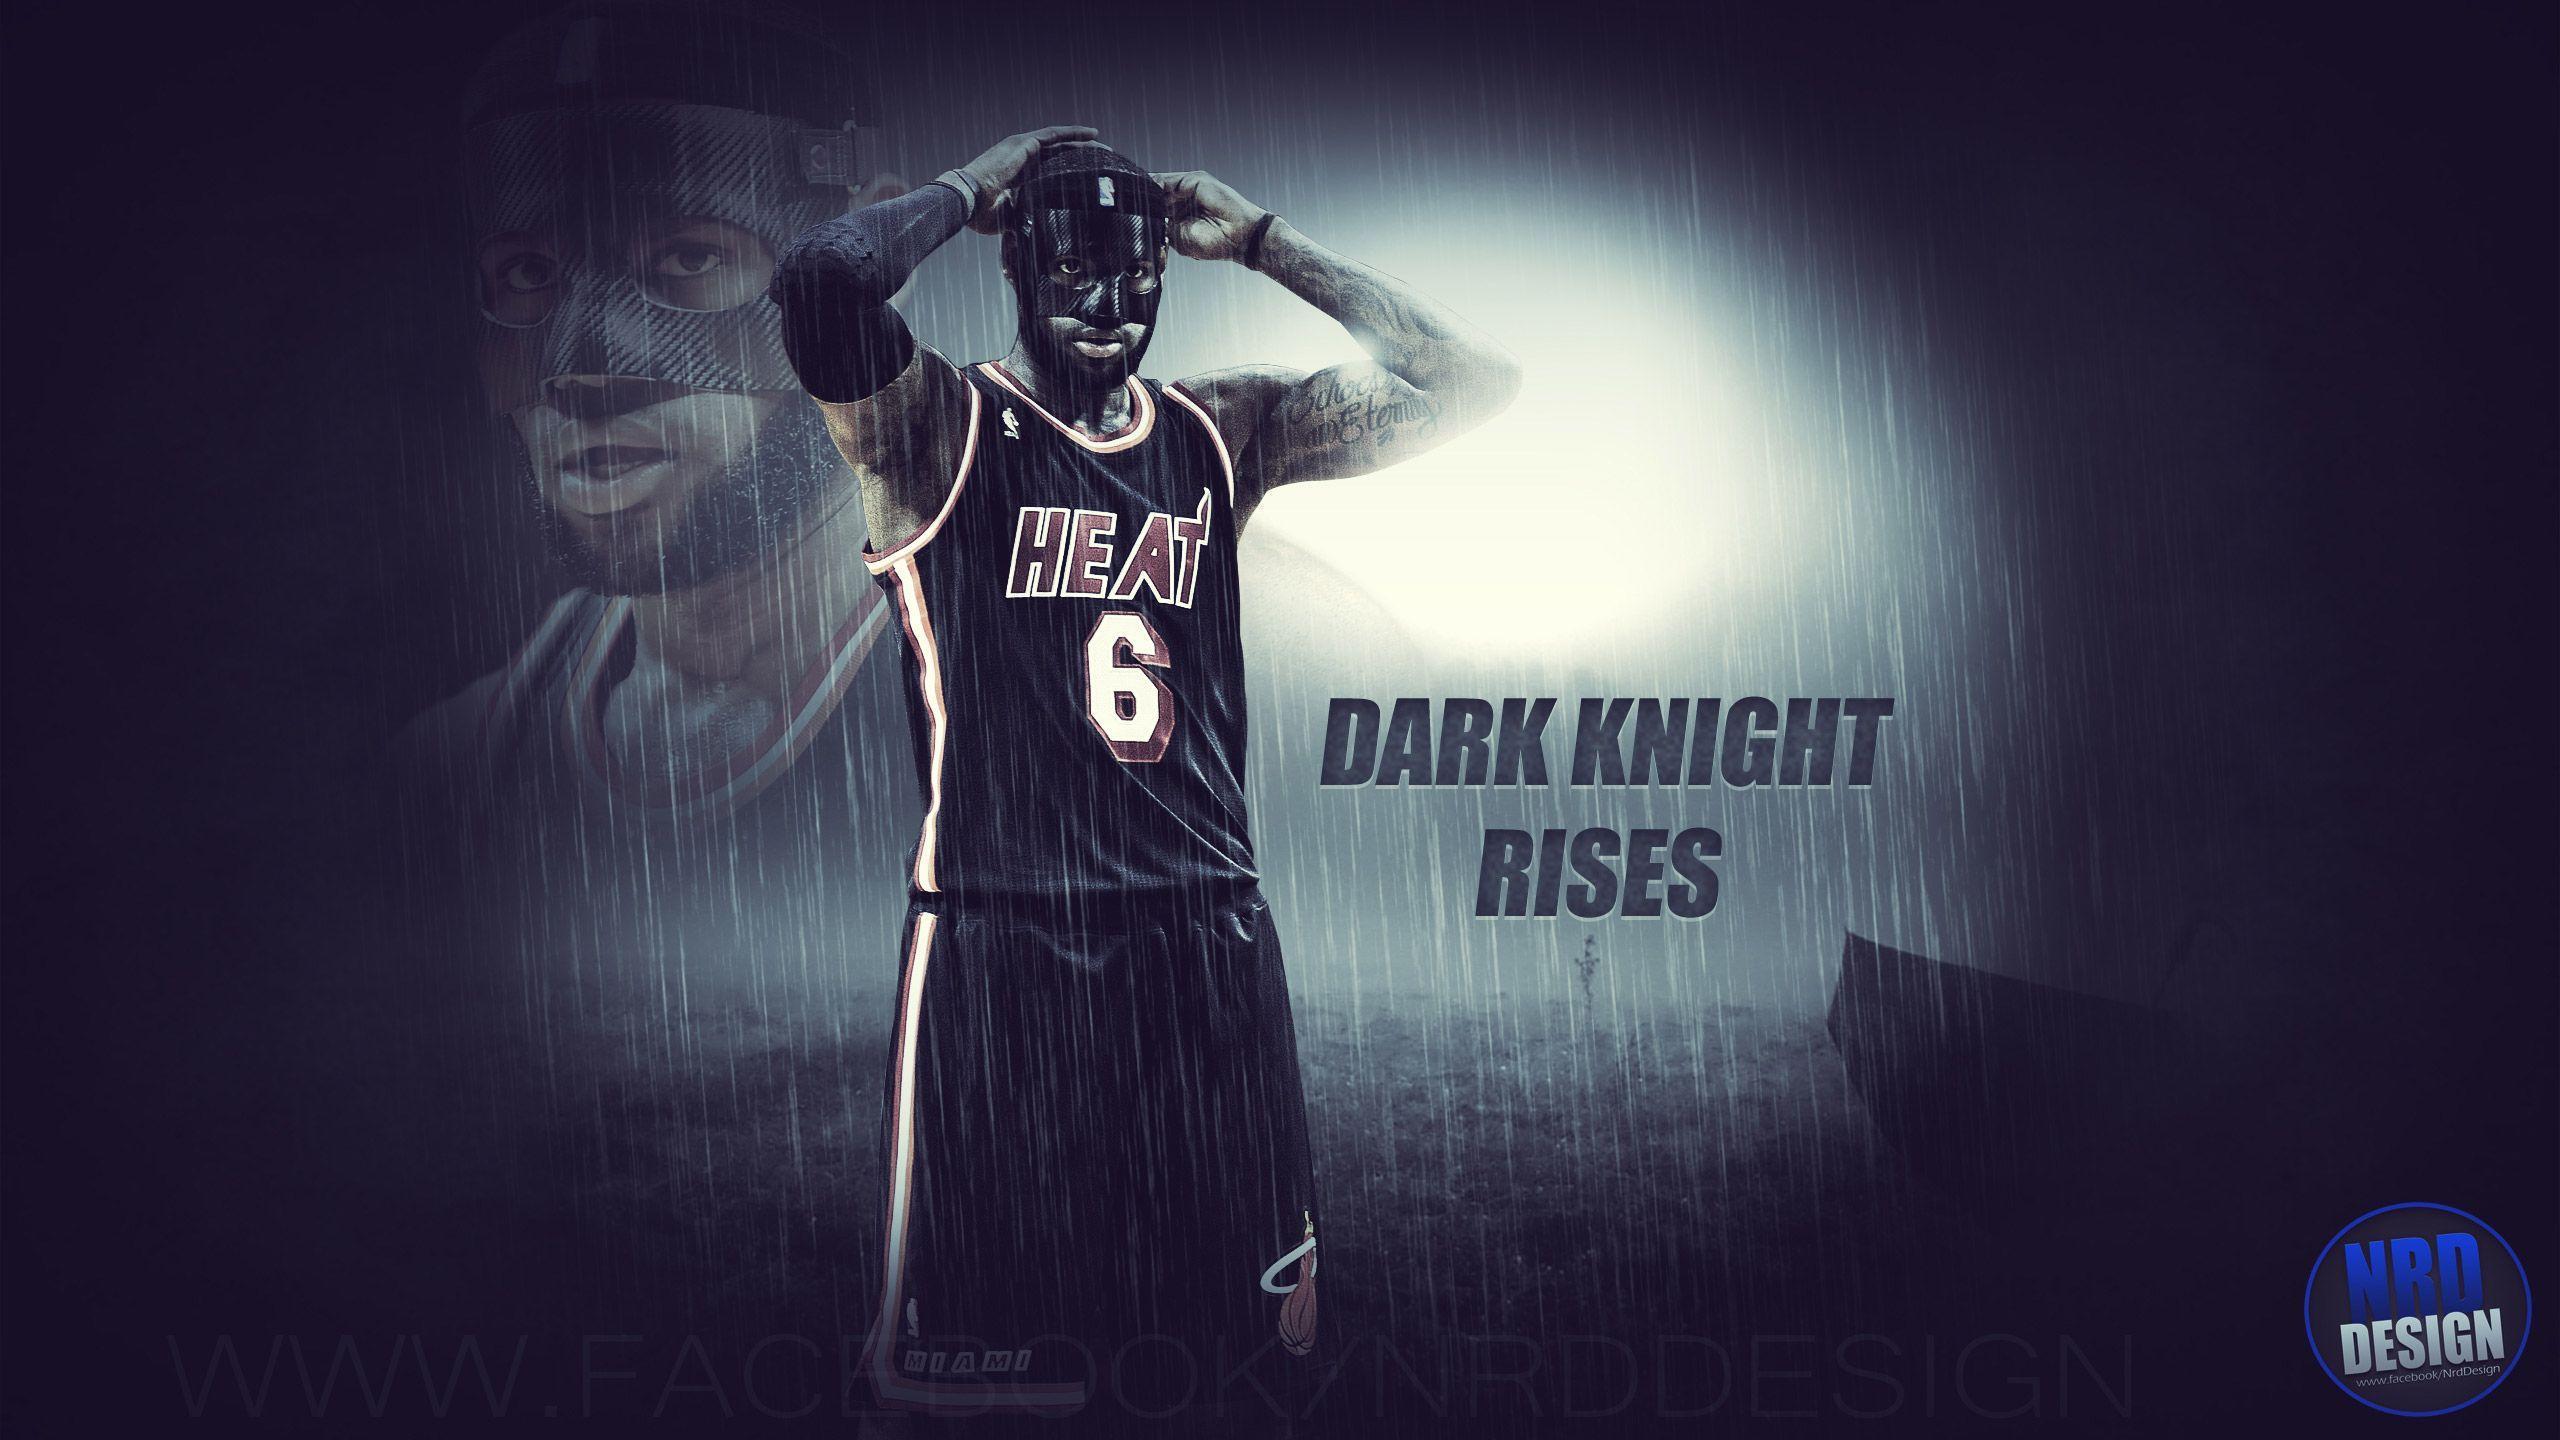 LeBron James Dark Knight Rises 2014 Wallpaper. Basketball